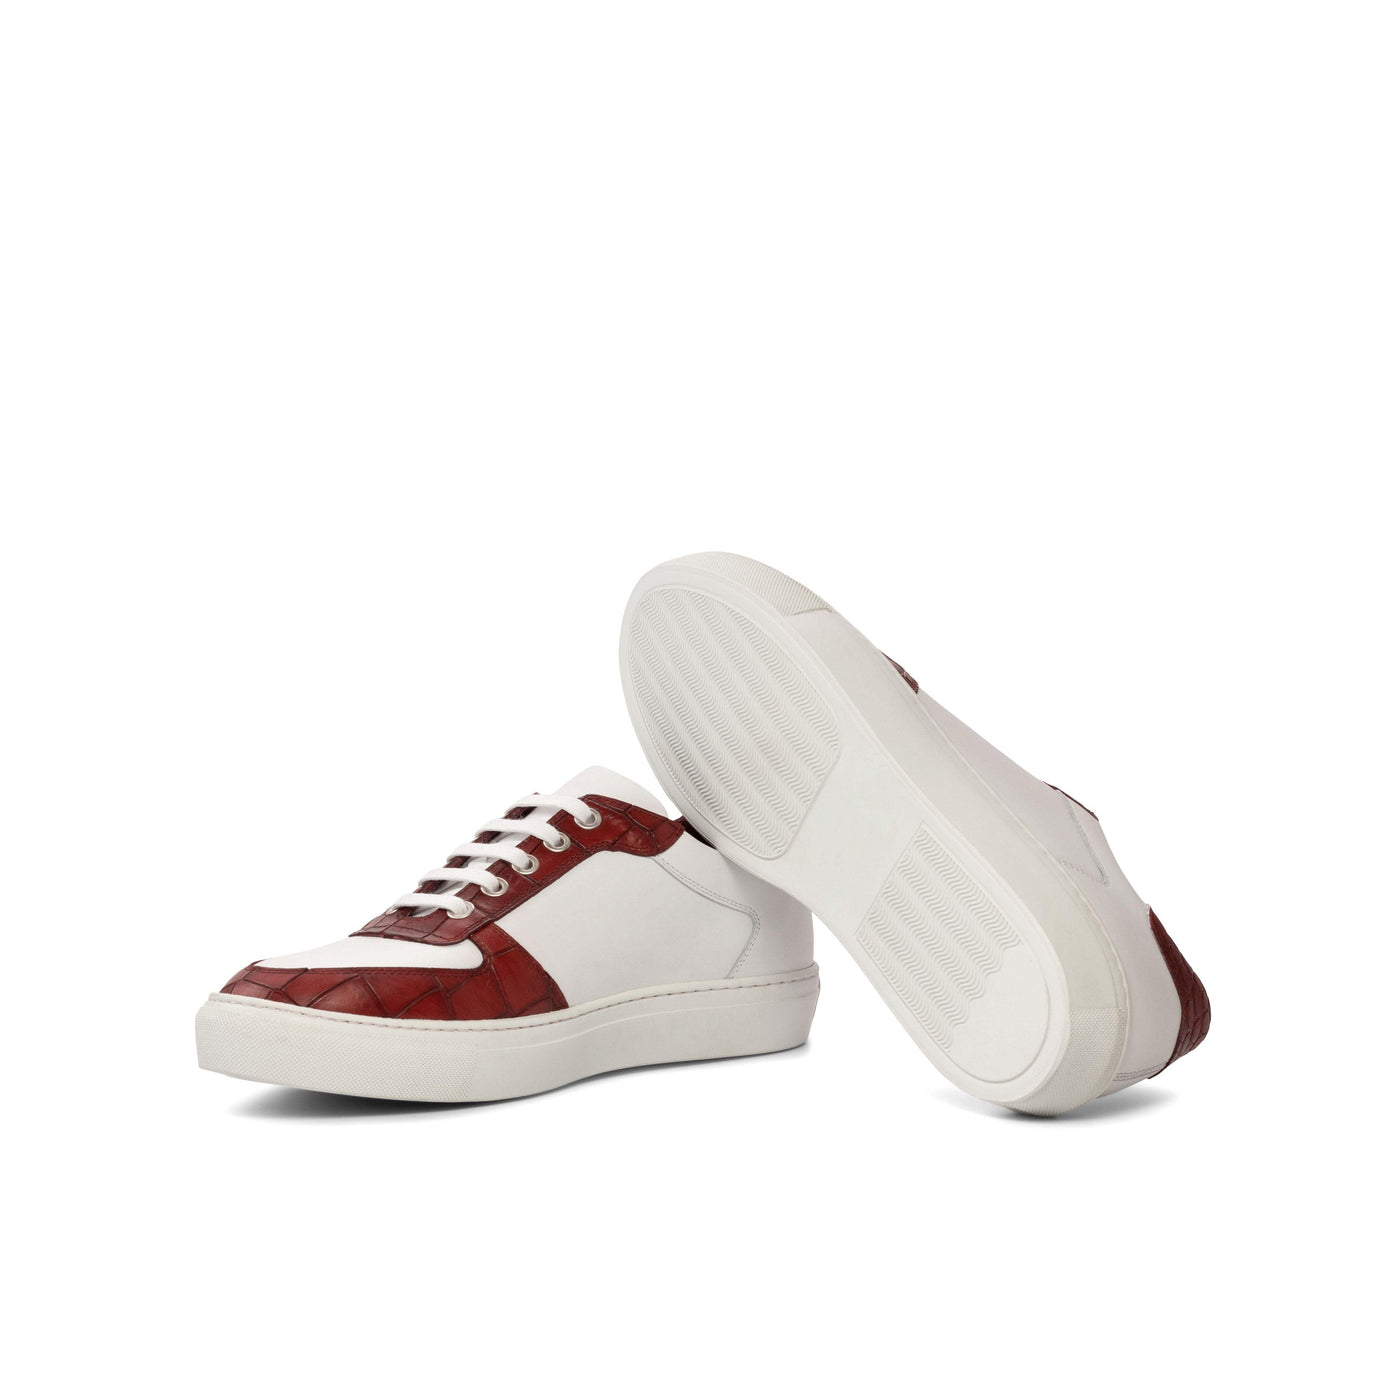 Men's Low Top Trainer Shoes Leather Red 5202 2- MERRIMIUM